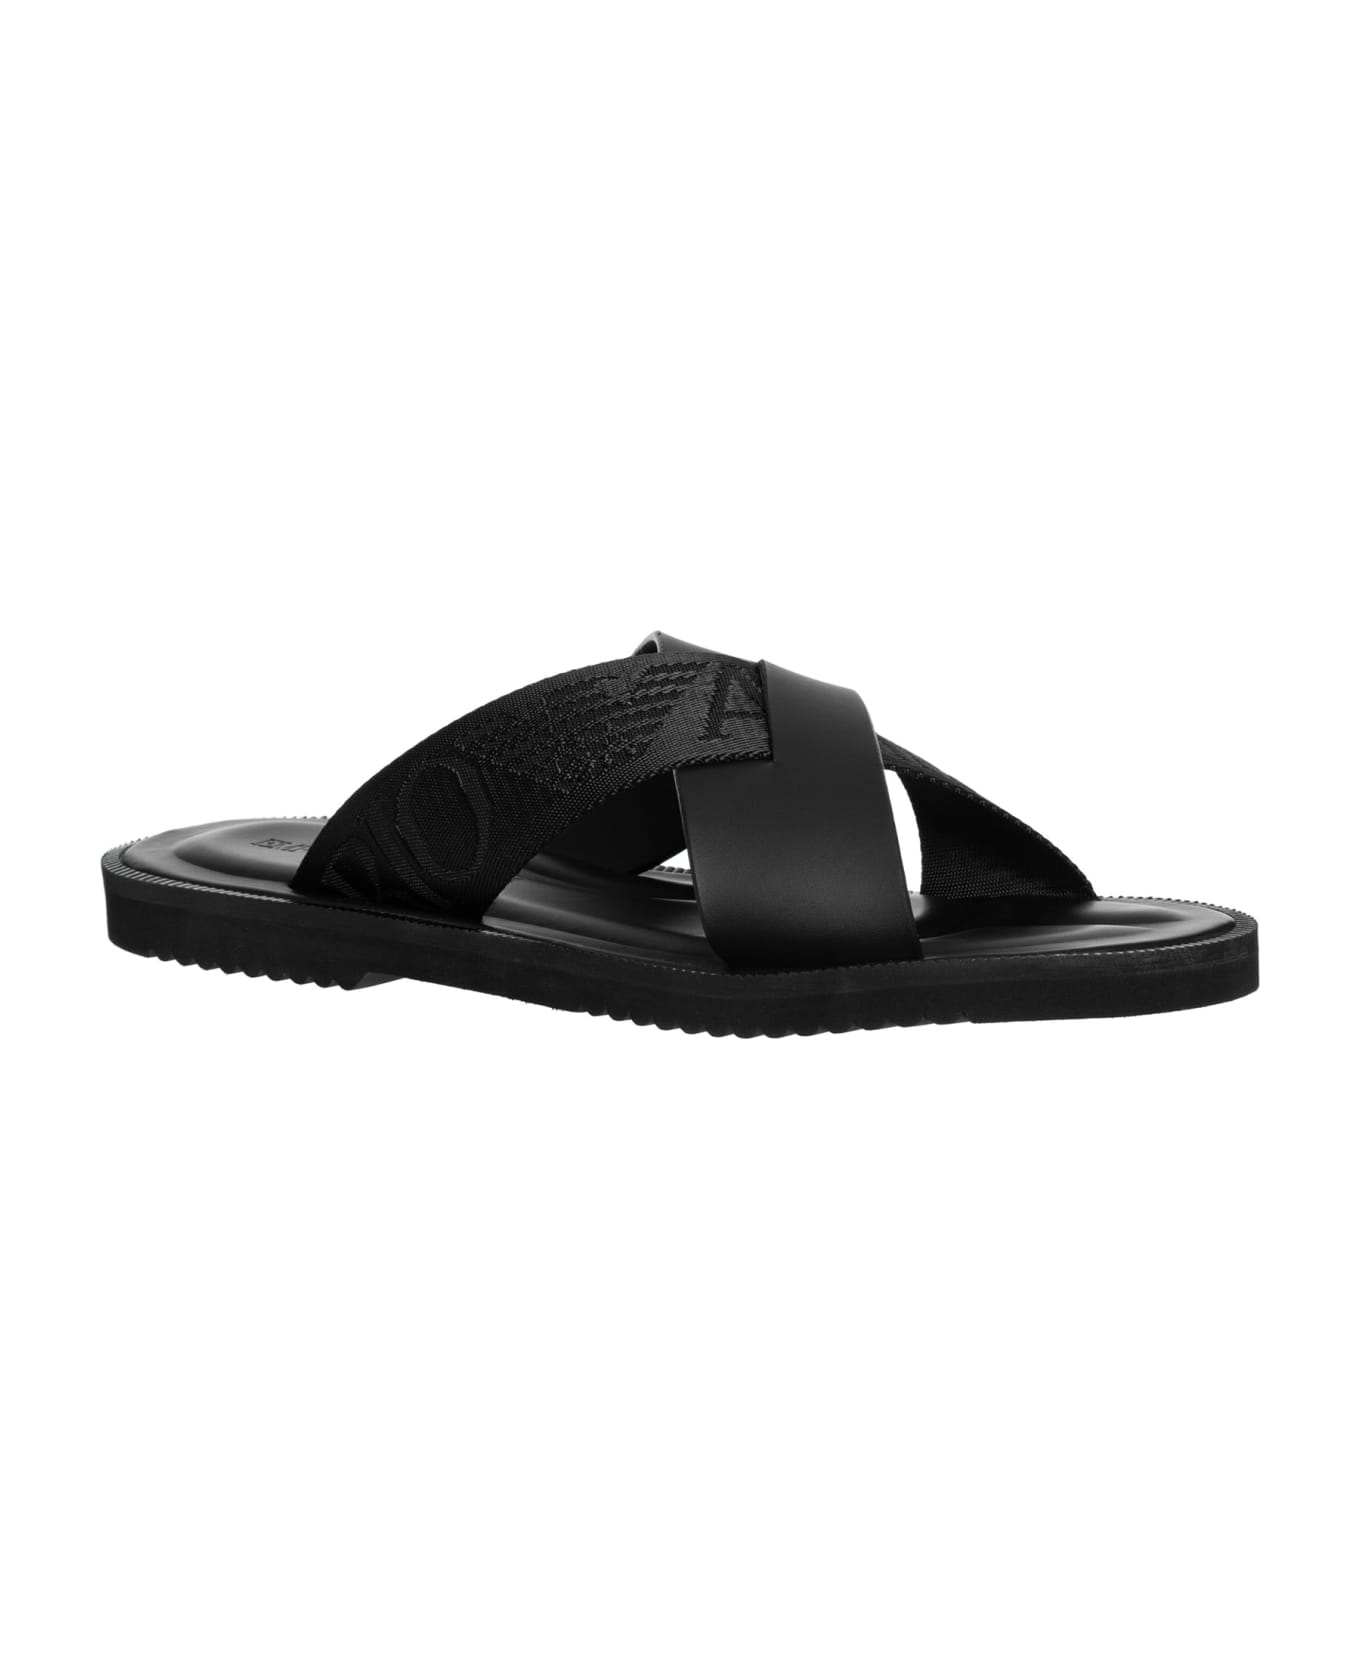 Emporio Armani Leather Sandals - Black